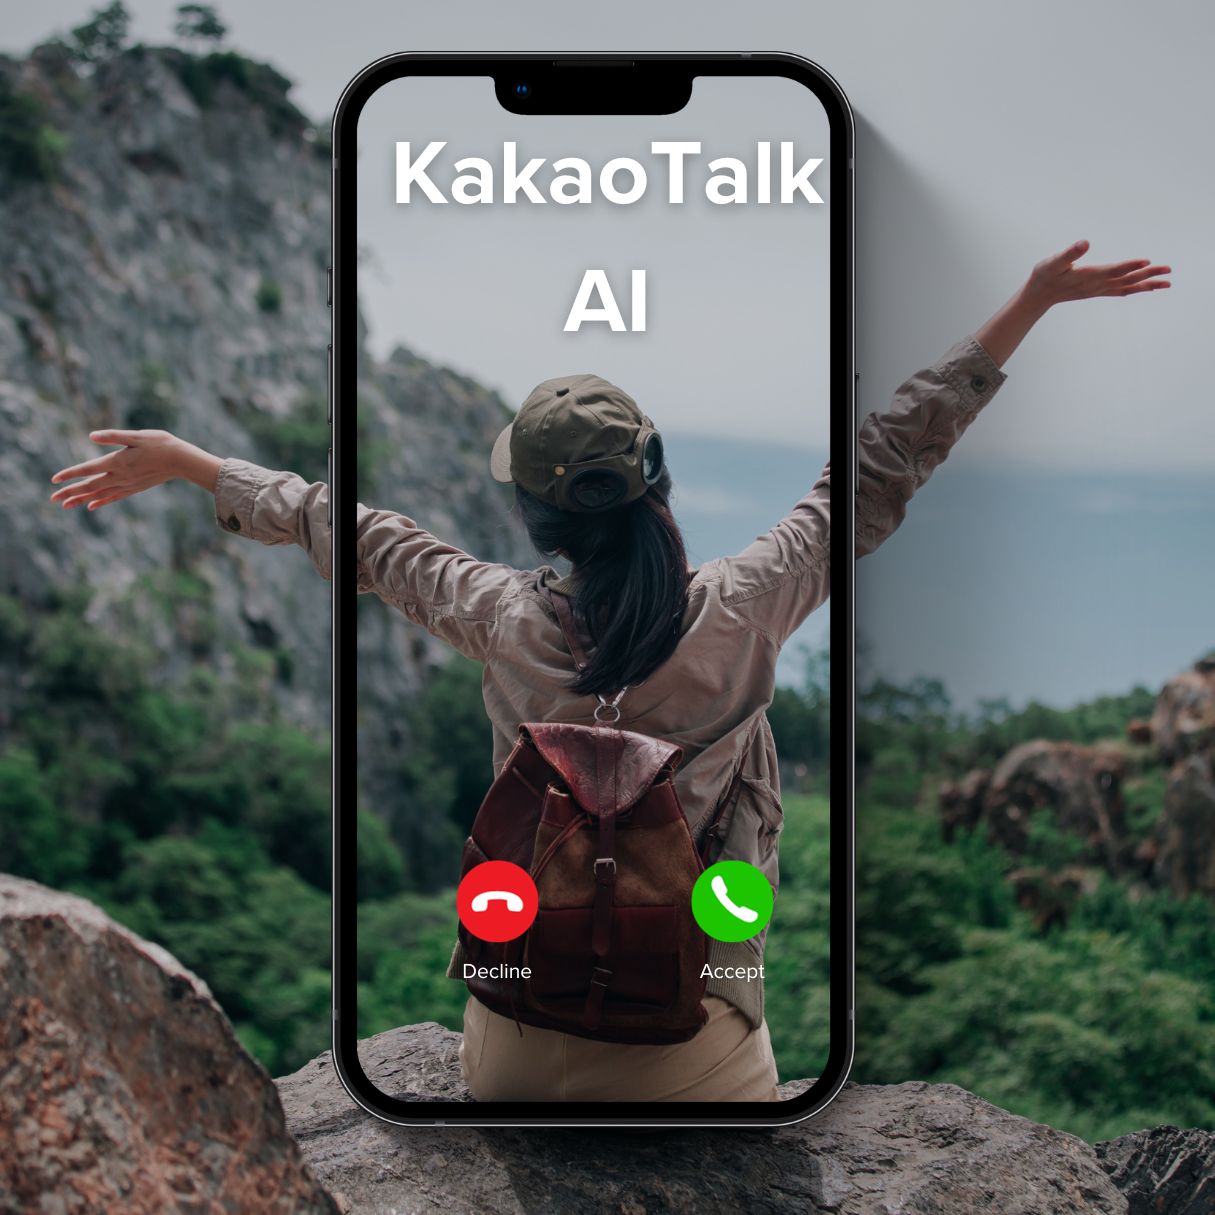 How To Use KakaoTalk AI